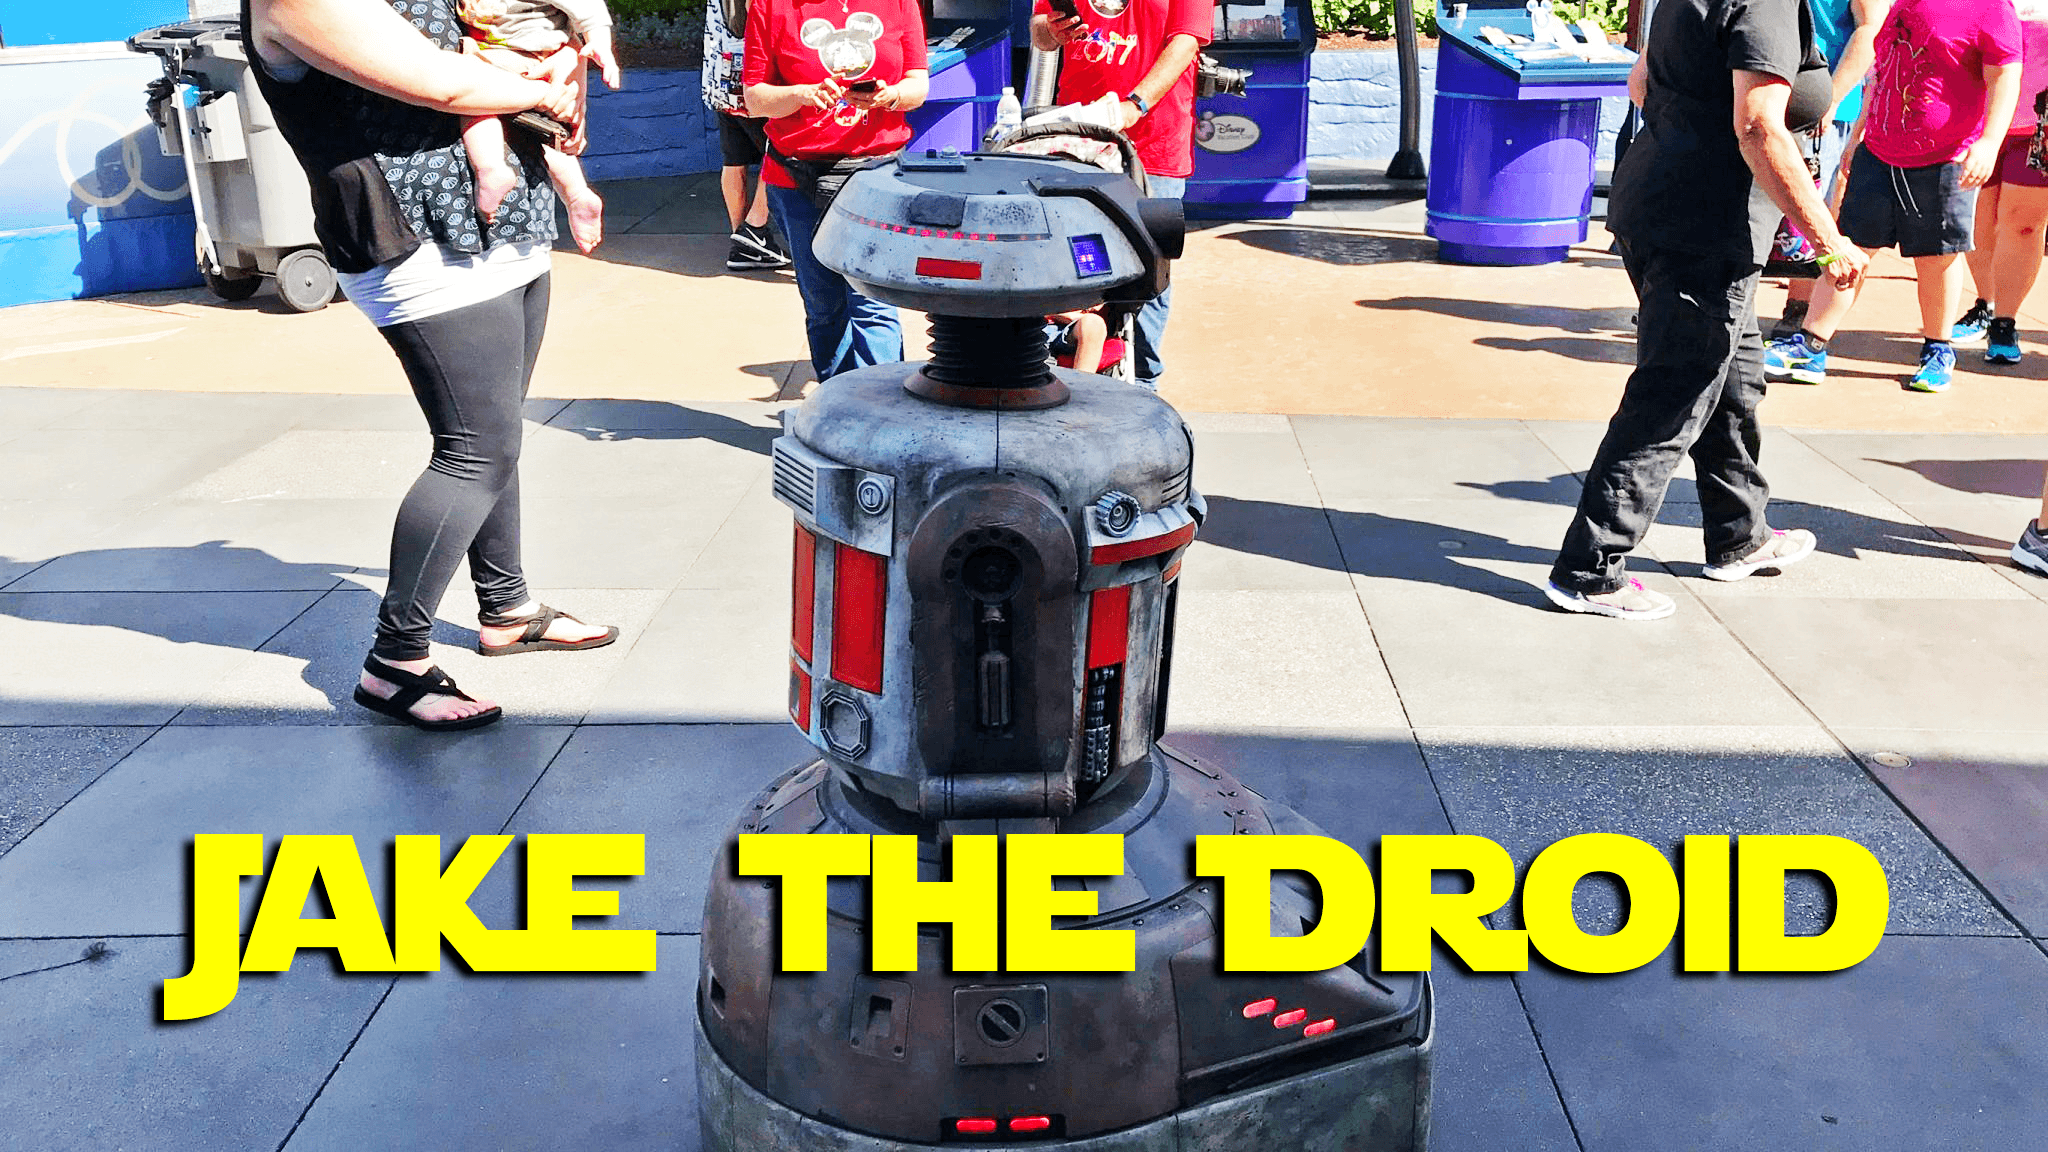 Jake the Droid at Disneyland